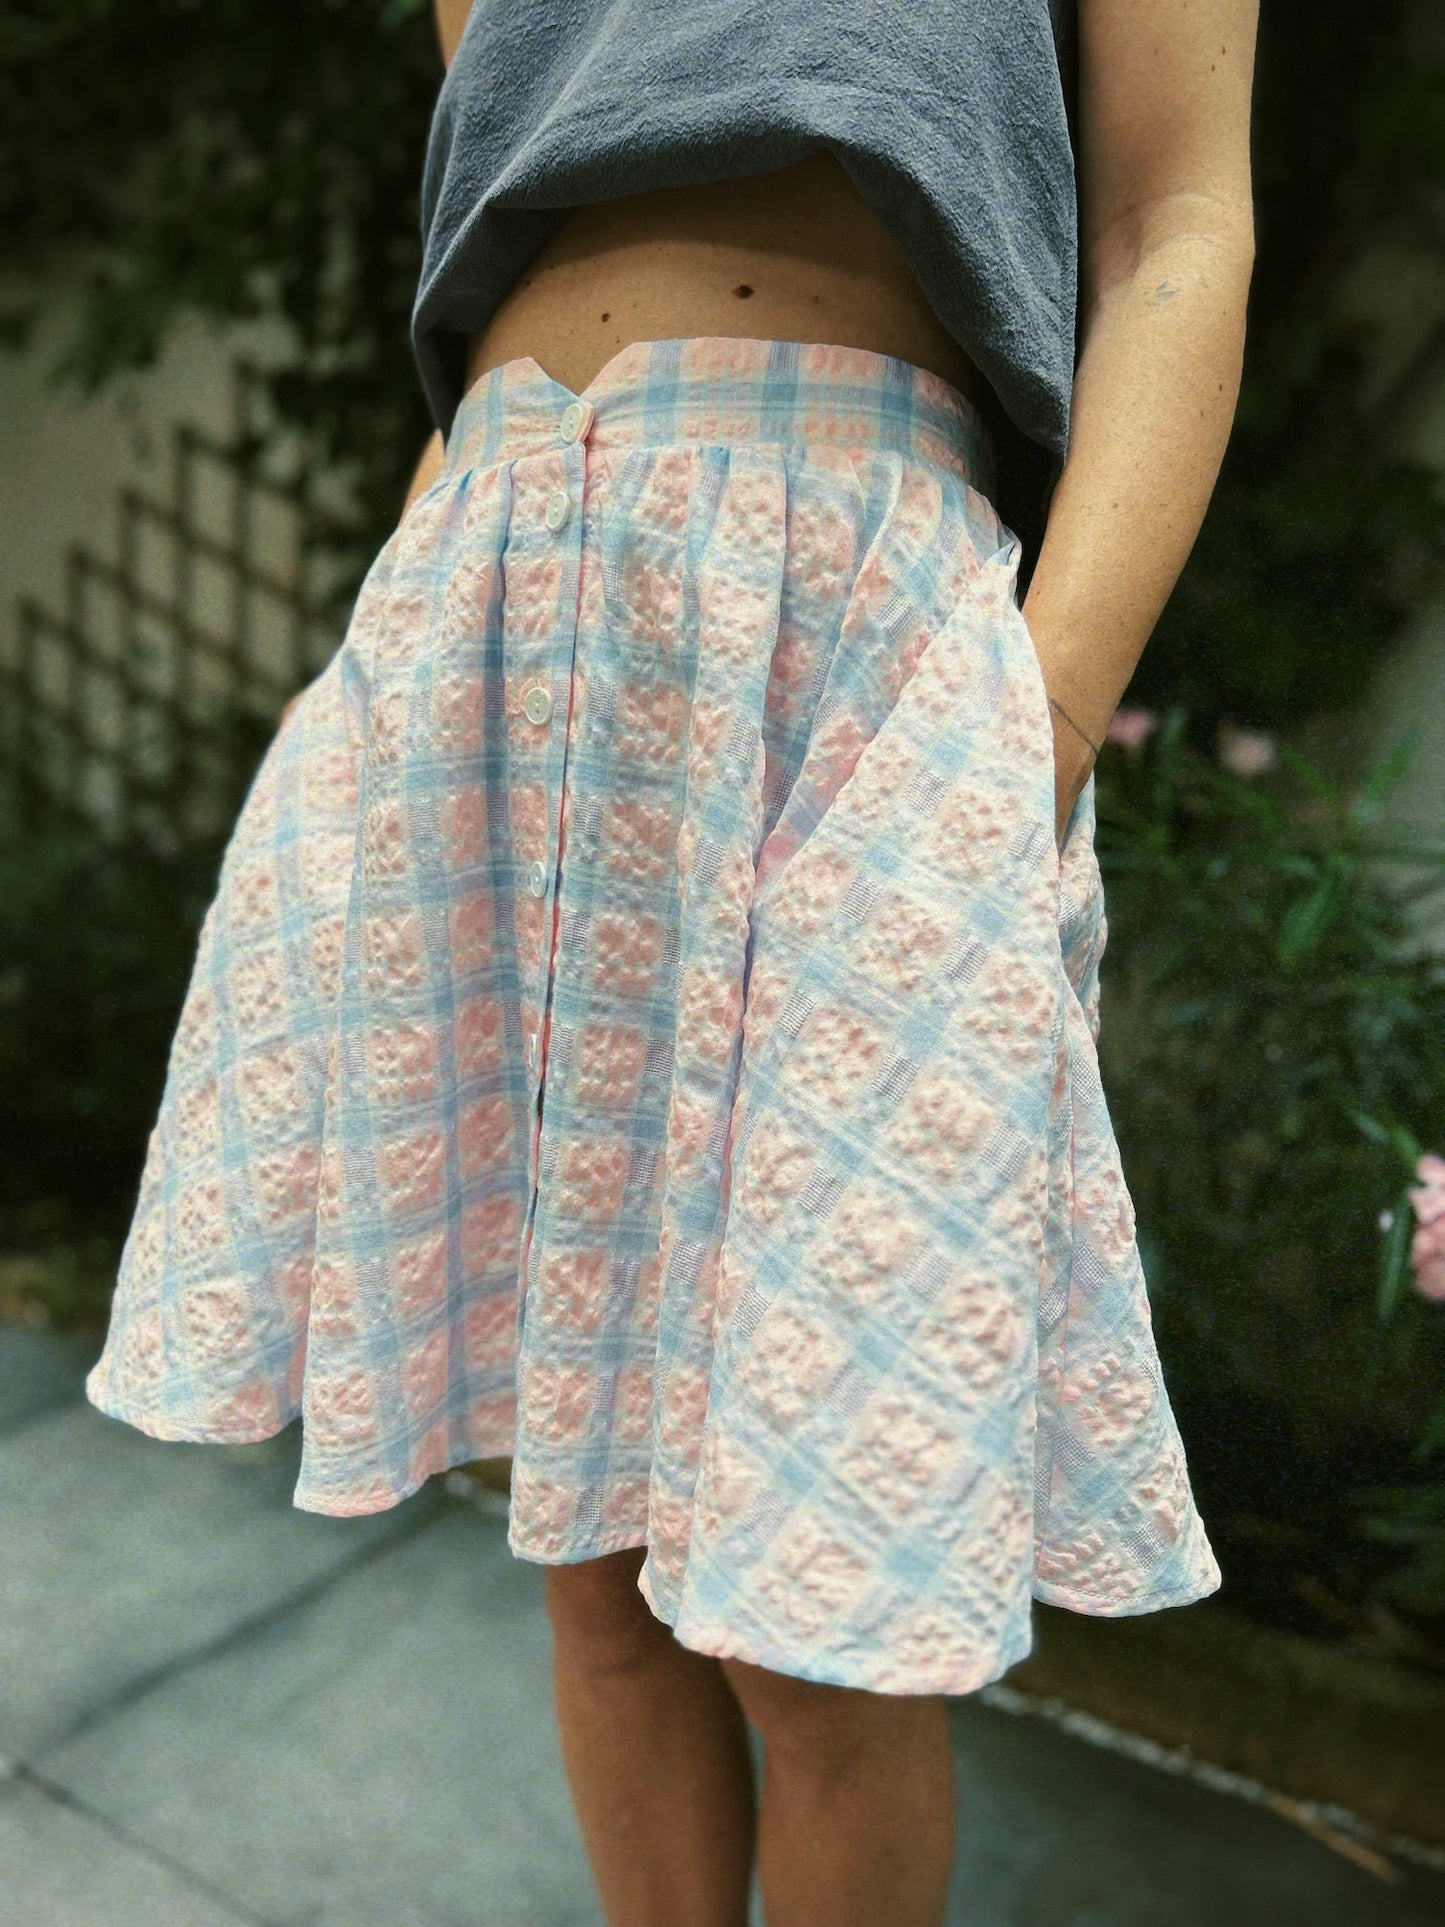 The Ella skirt